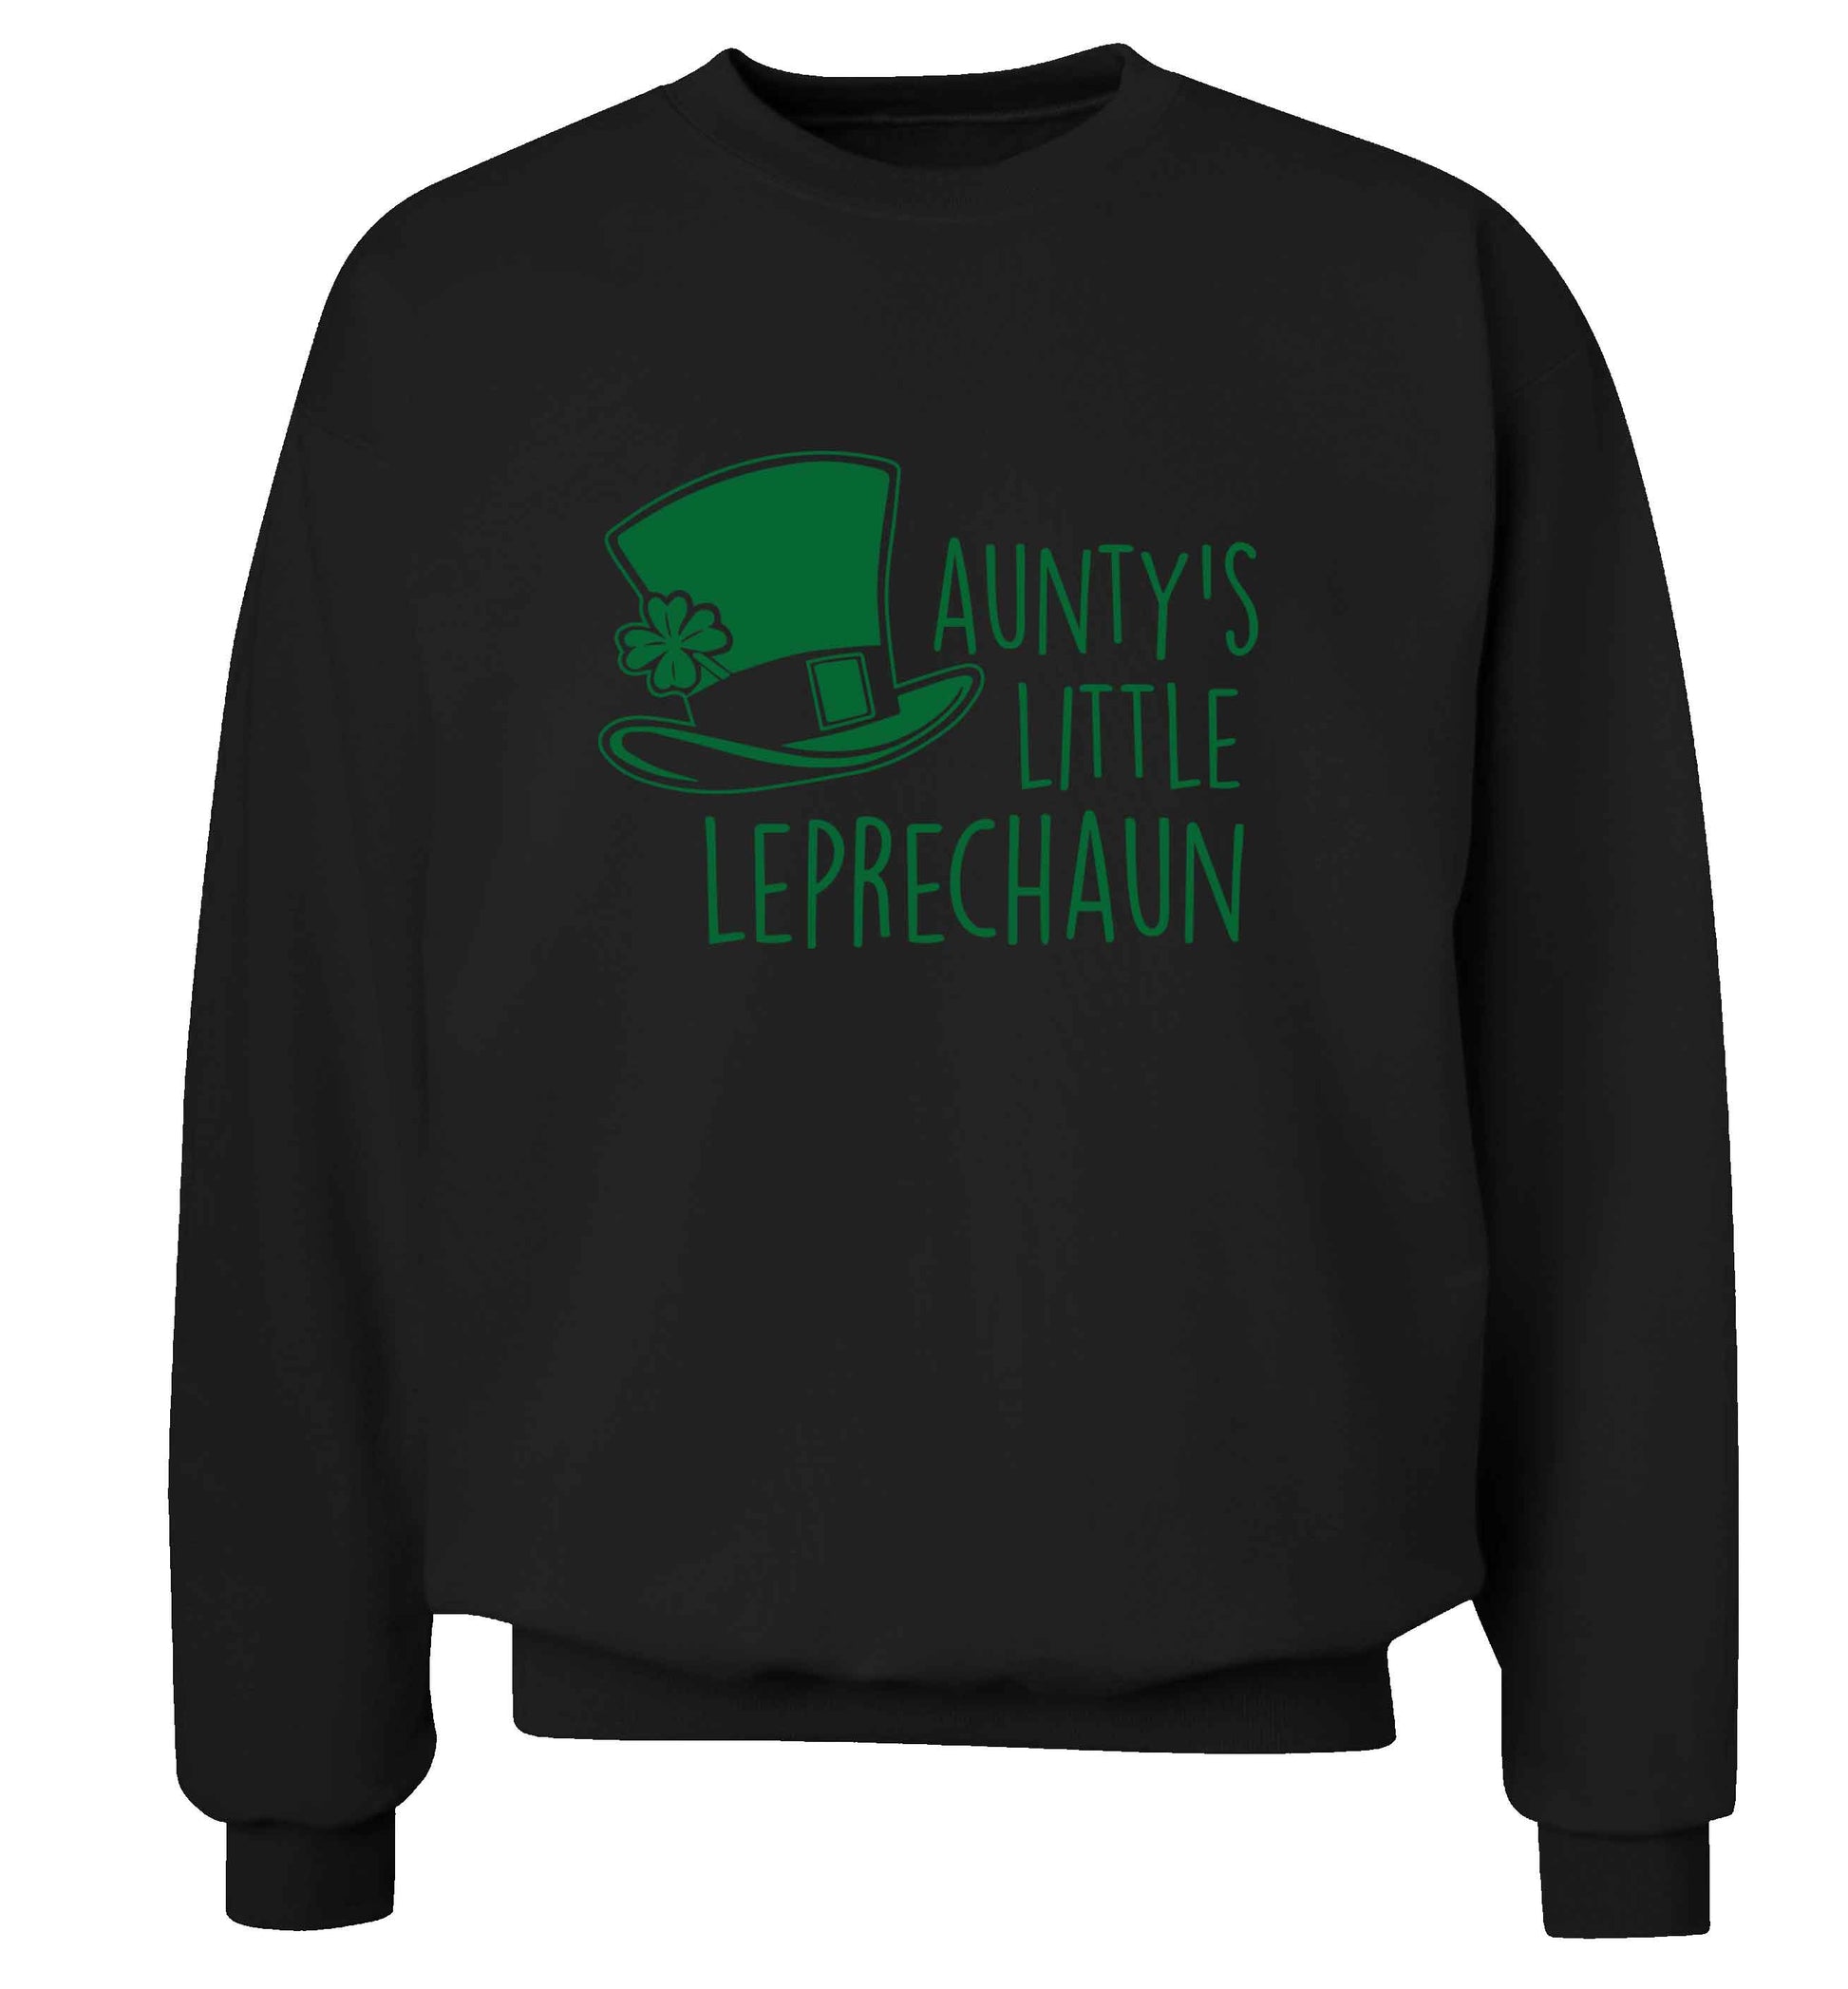 Aunty's little leprechaun adult's unisex black sweater 2XL